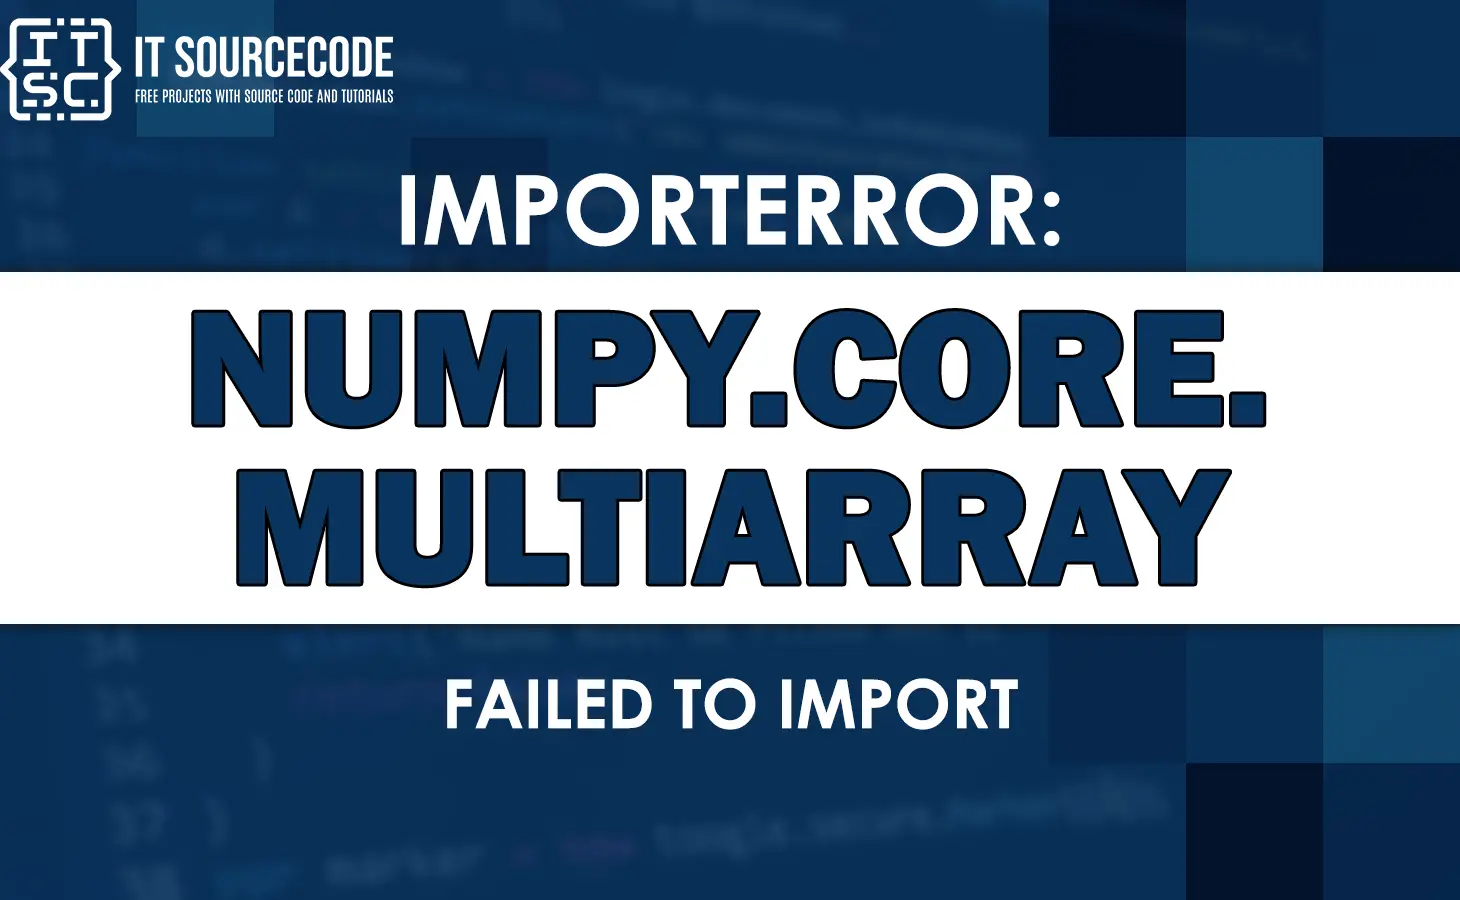 Importerror numpy.core.multiarray failed to import